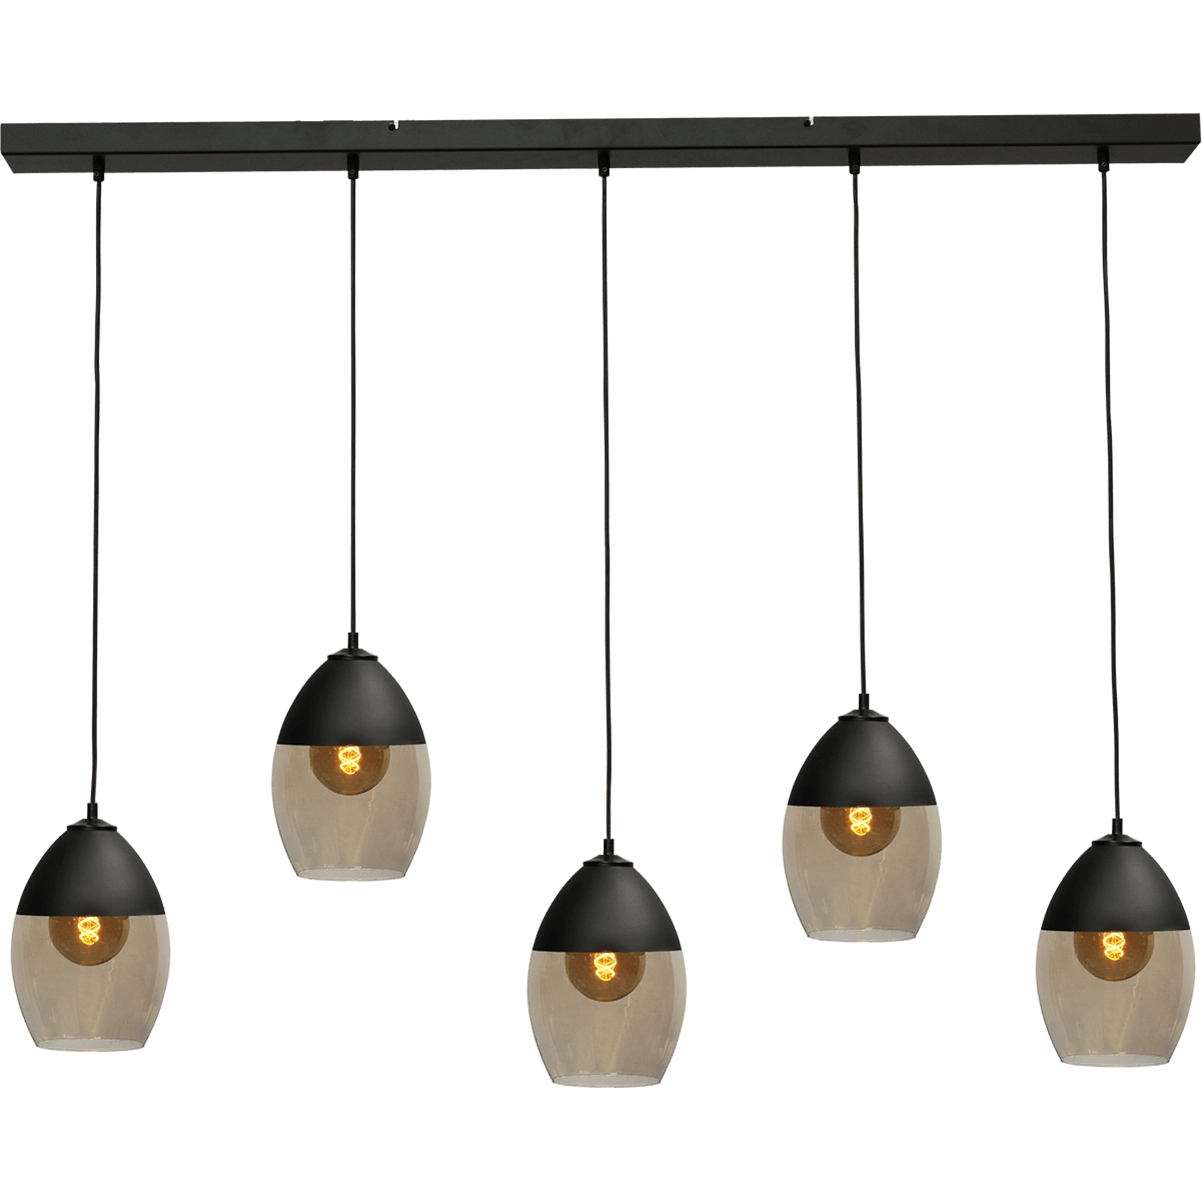 Hanglamp Opaco 5-lichts mat zwart 130x8cm 5x glas smoke Ø19x26cm - MASTERLIGHT